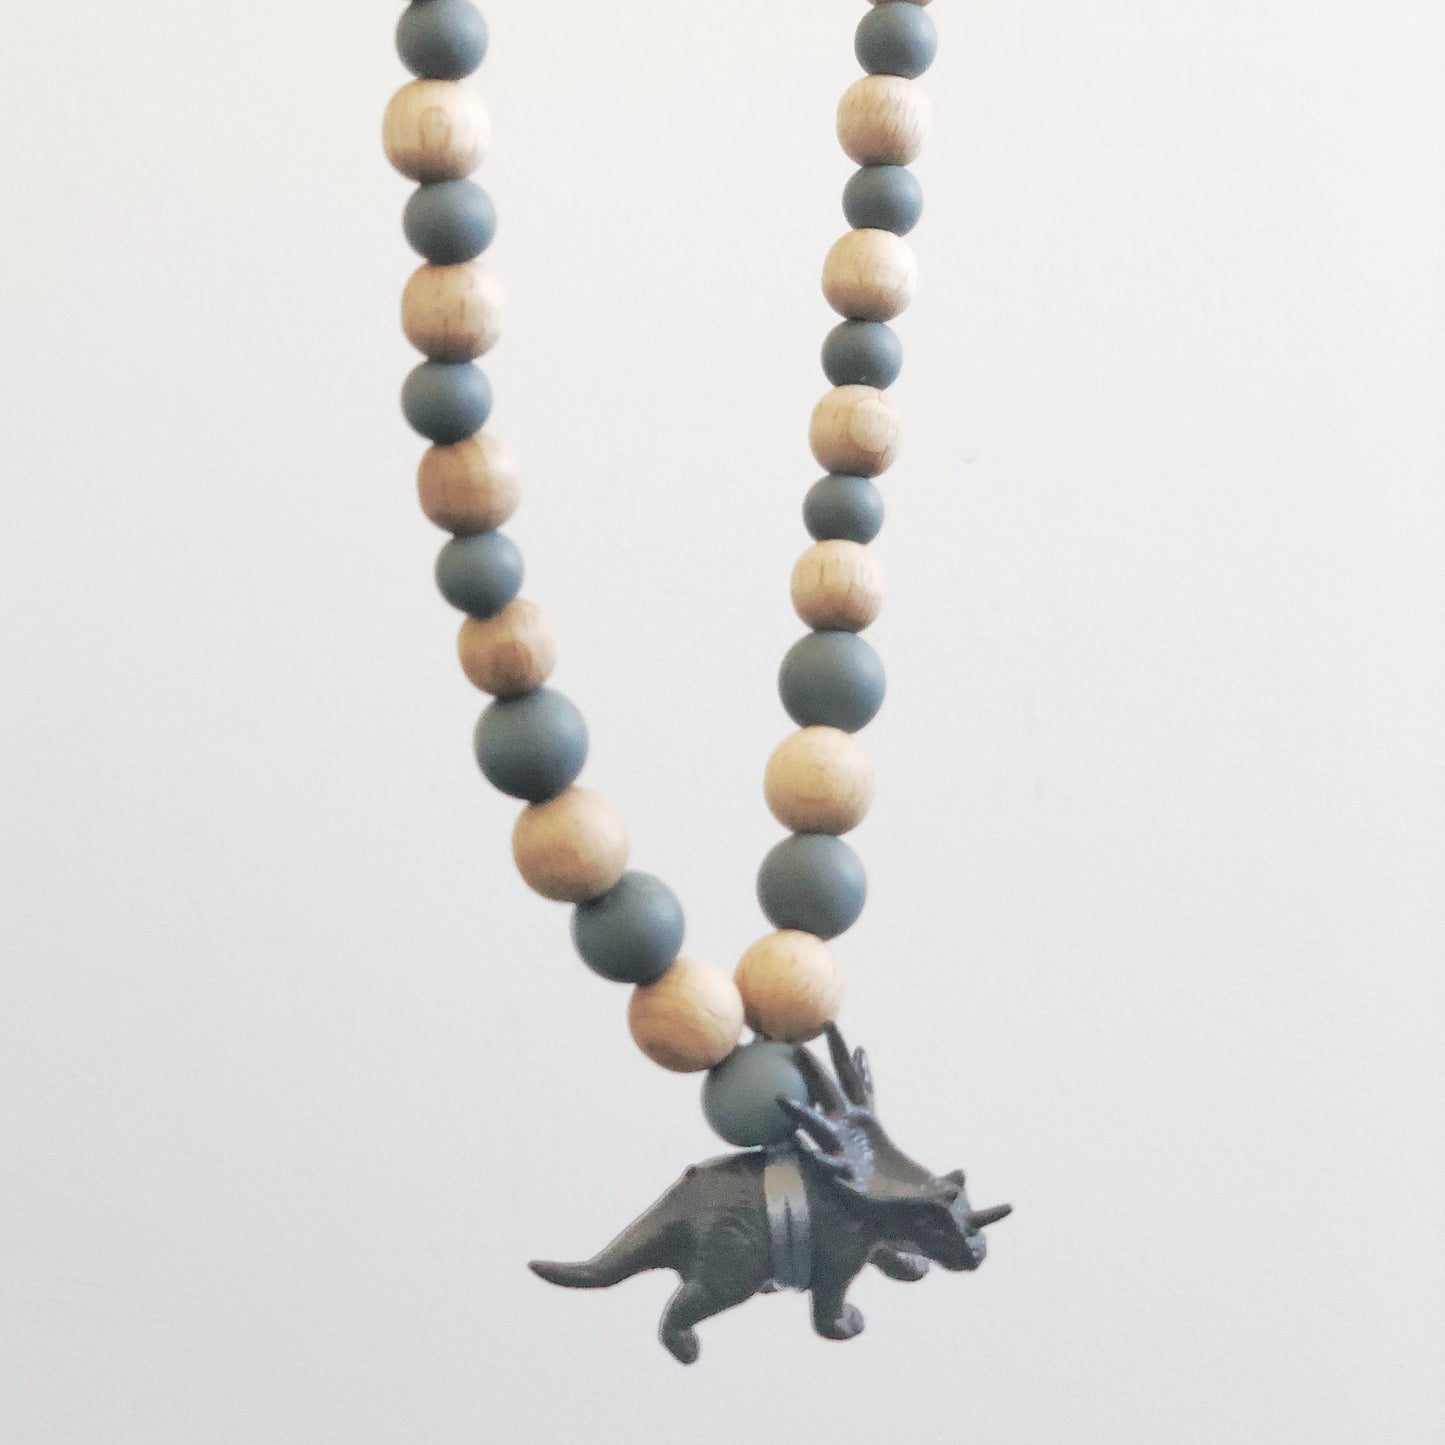 Dinosaur Necklace